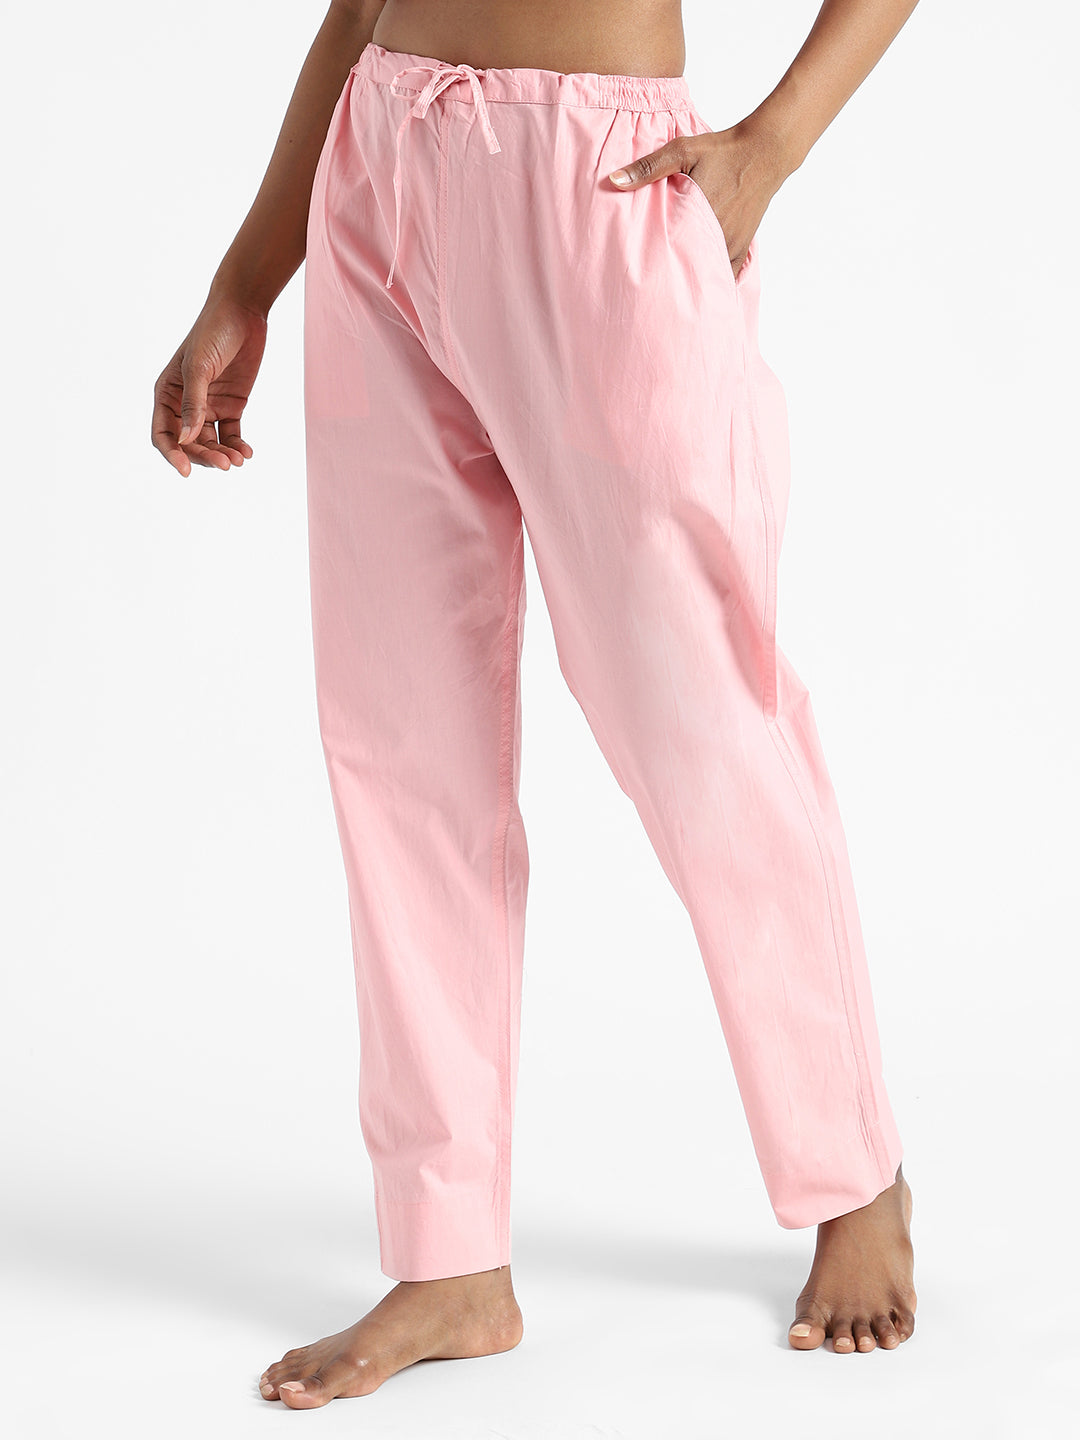 Rose Pink Women's Organic Cotton & Natural Dyed Slim Fit Pants